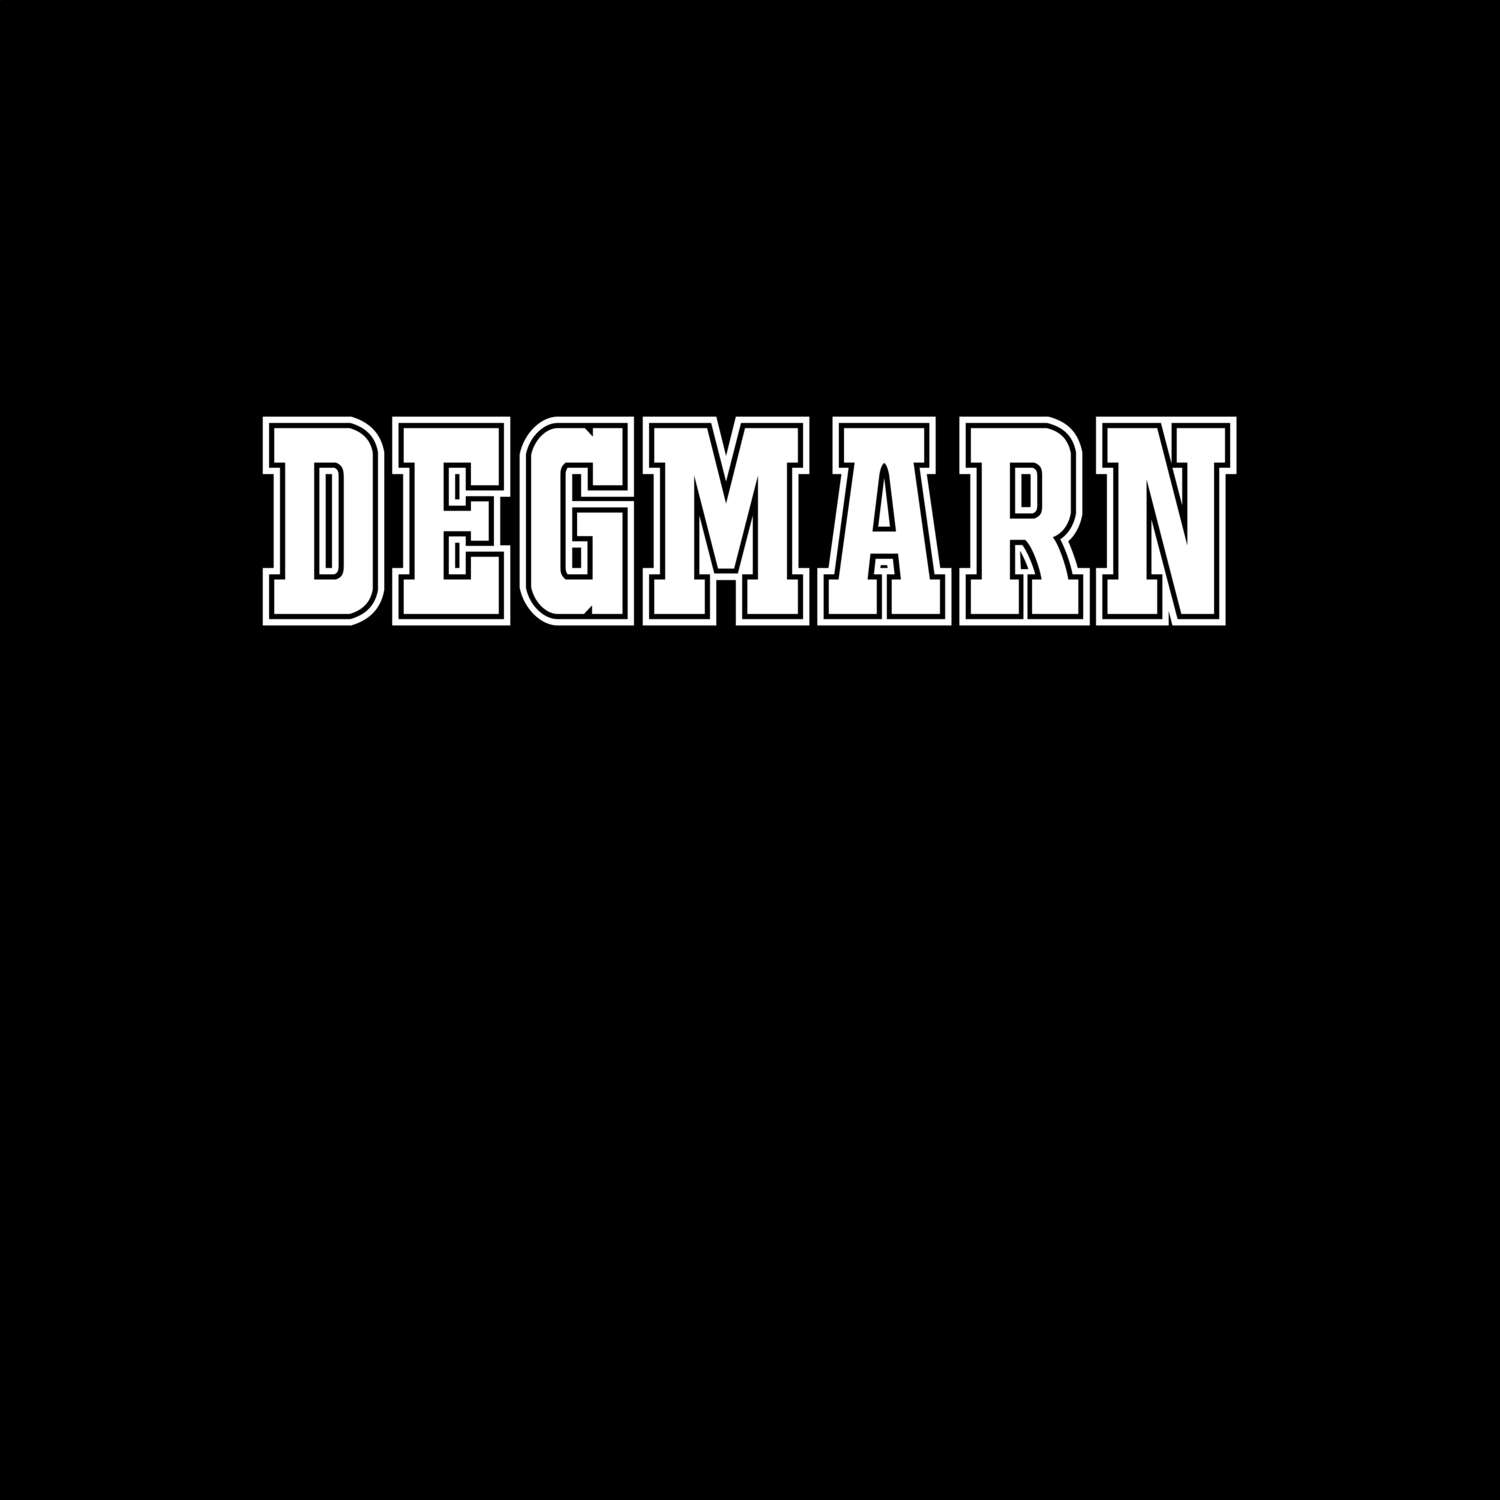 Degmarn T-Shirt »Classic«